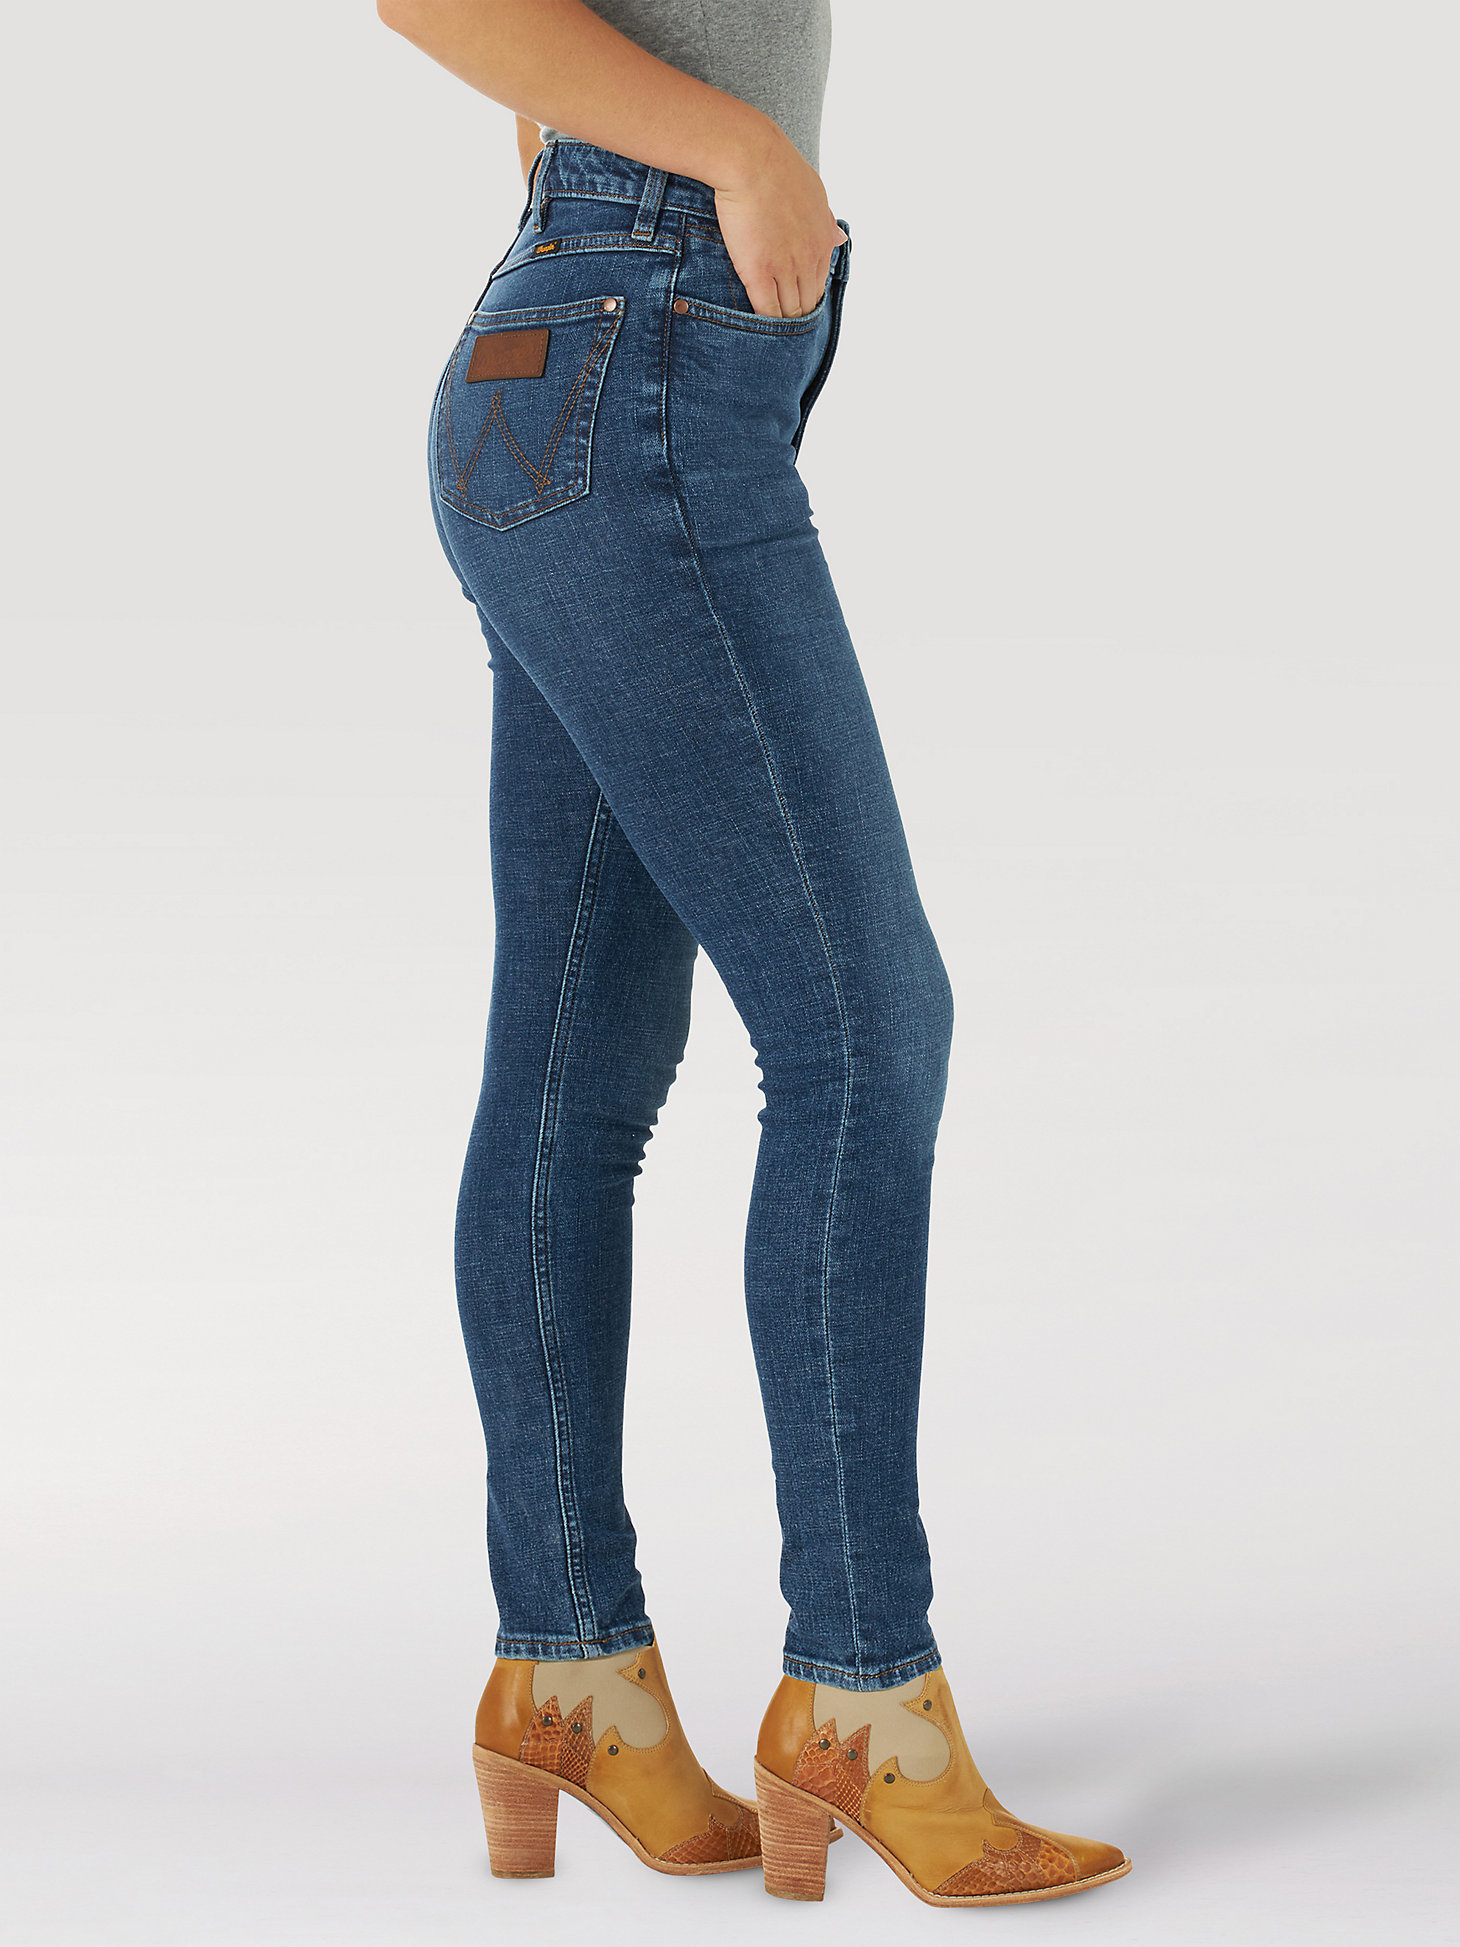 Wrangler Retro® Premium Jean: Women's High Rise Skinny in Annie alternative view 1